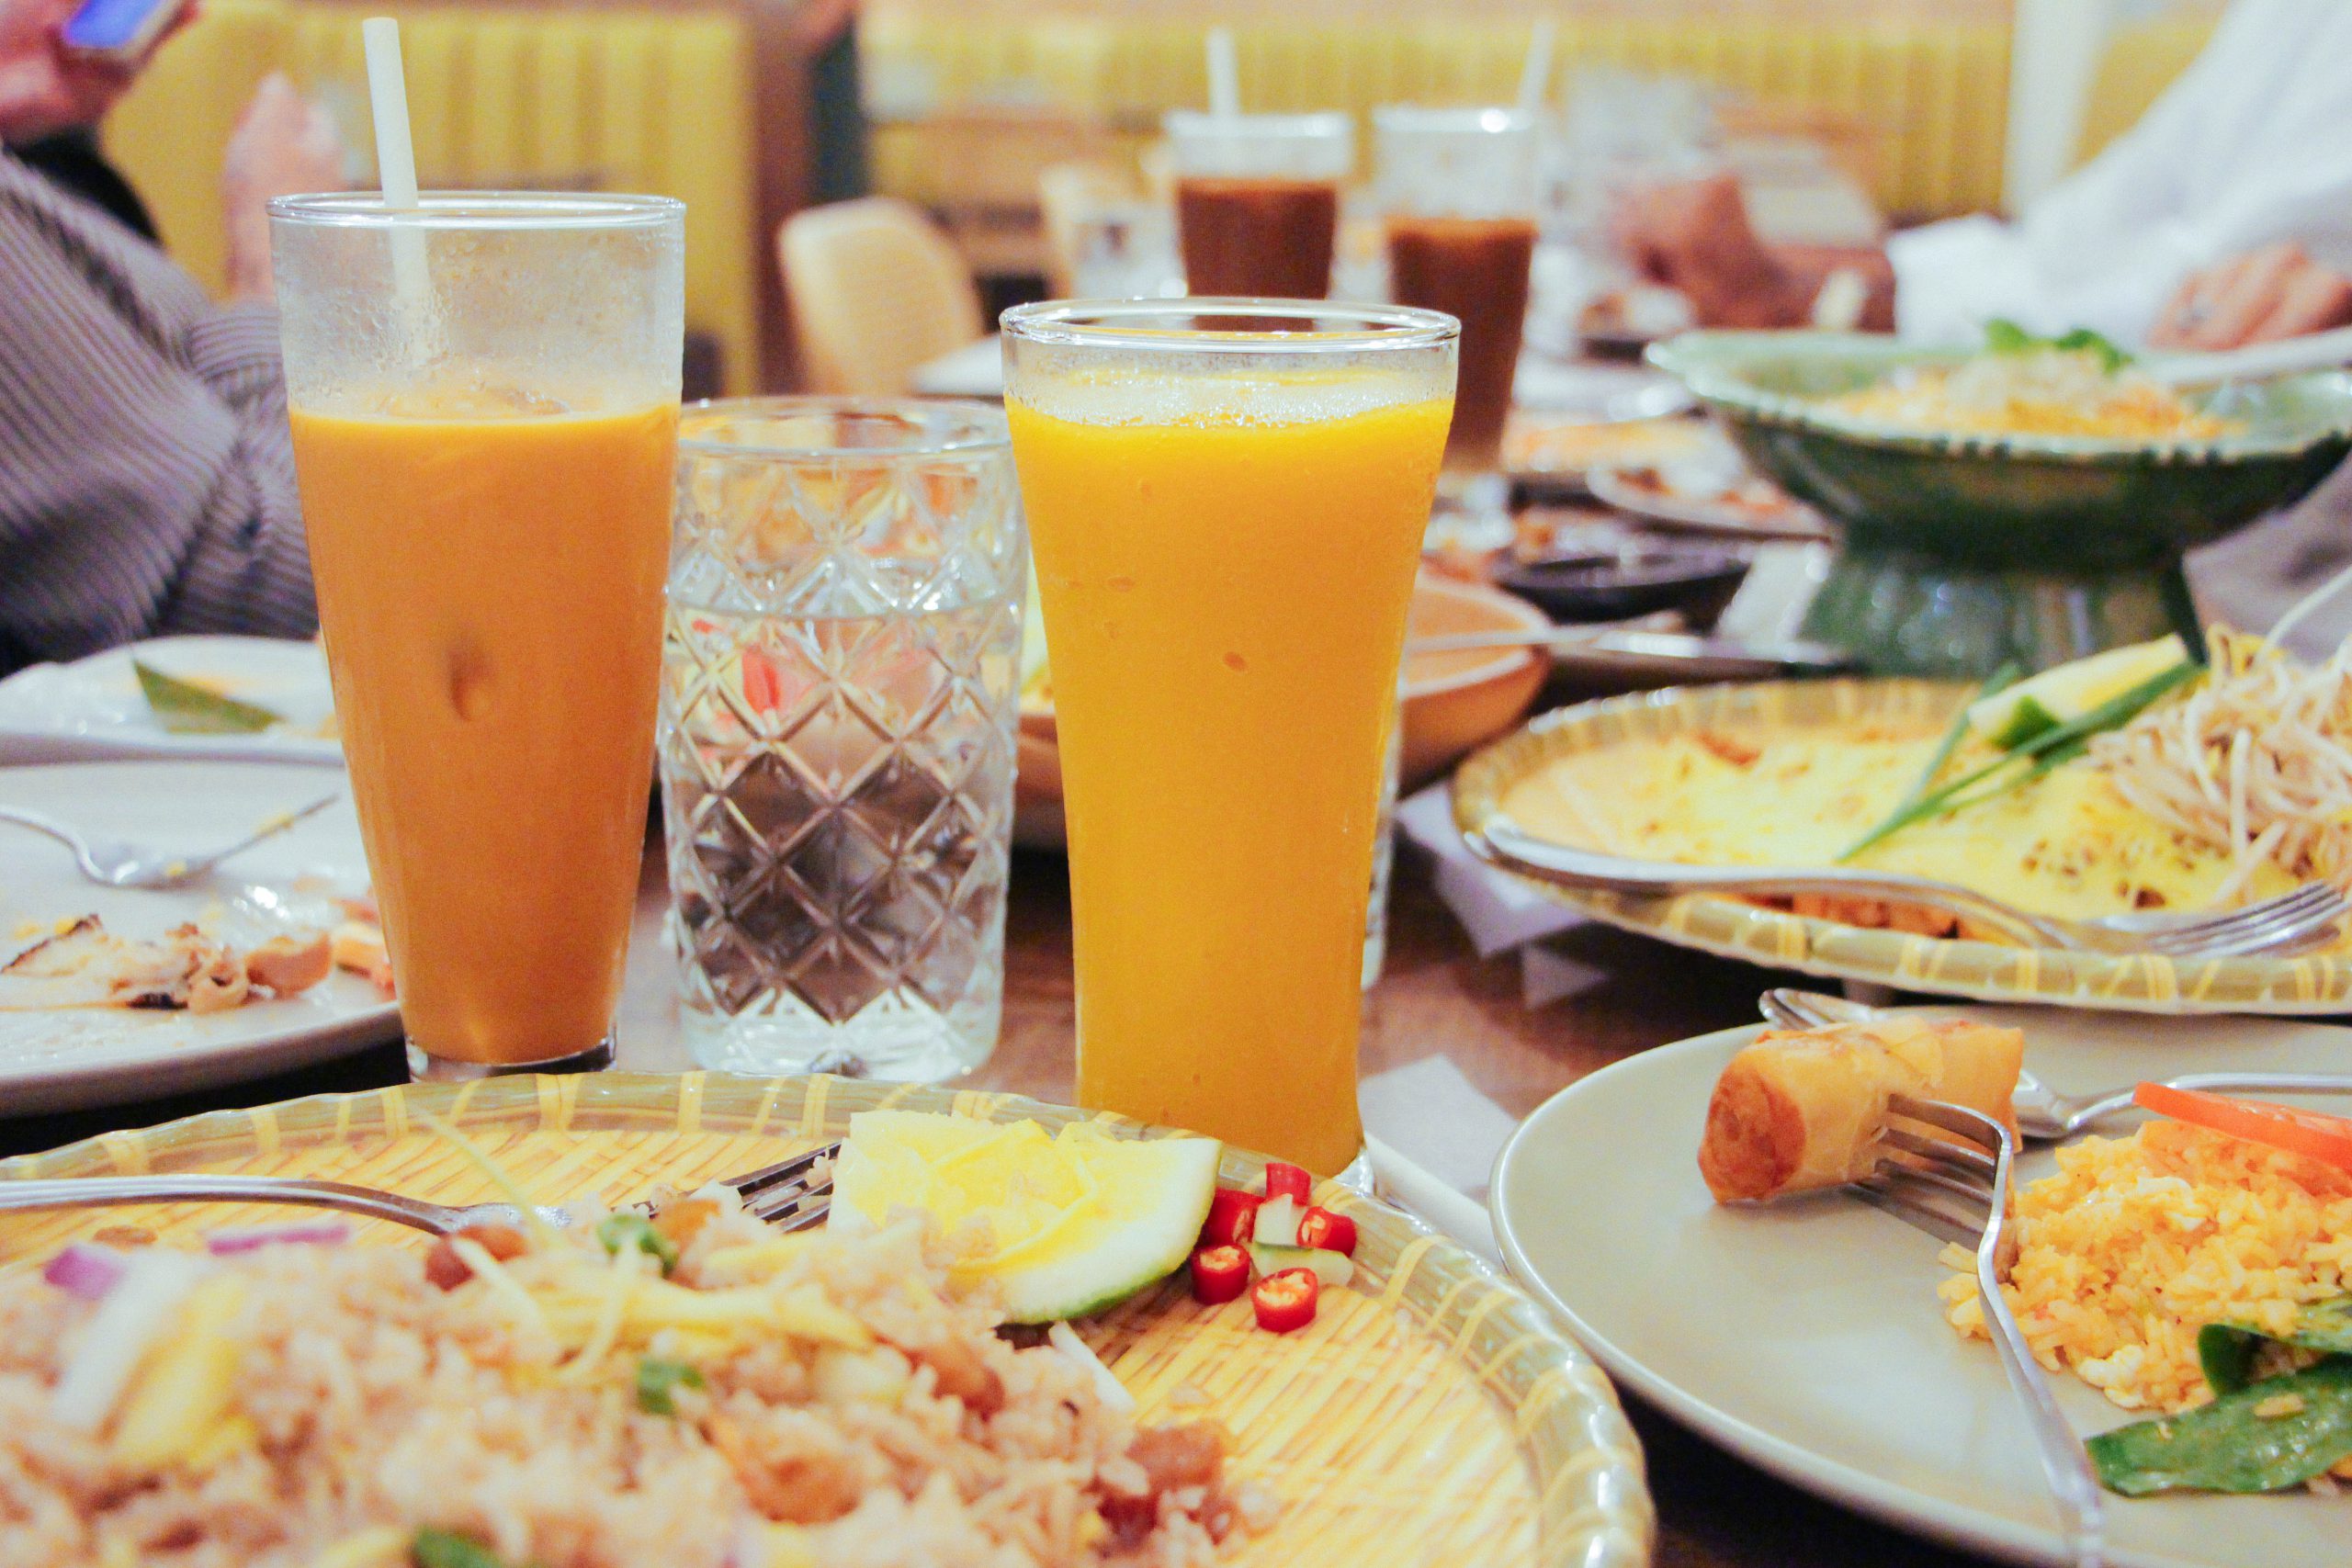 Experience fine Thai dining in this new Araneta City restaurant